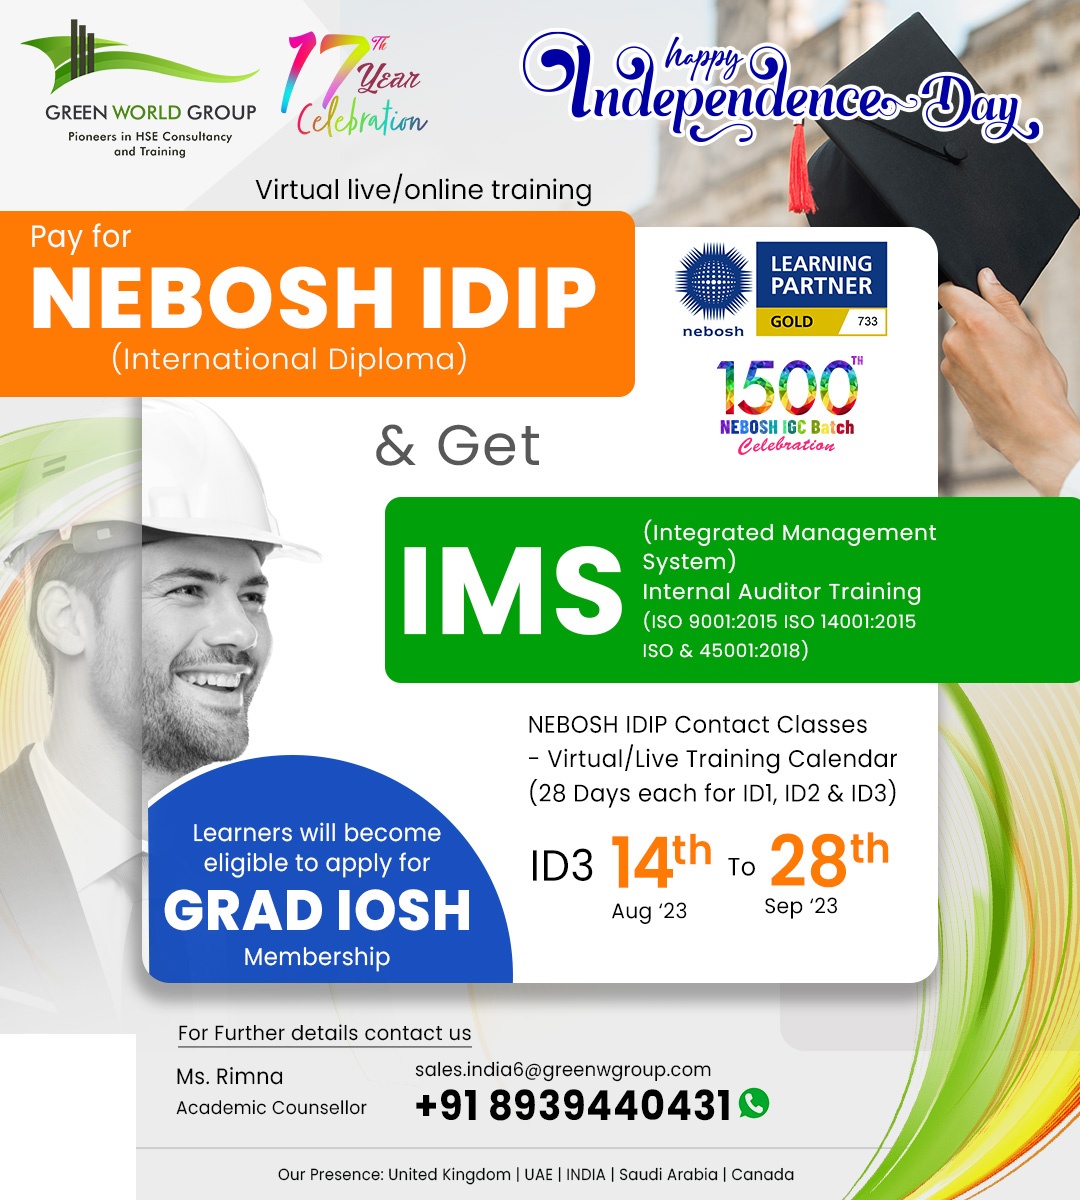 Enroll in NEBOSH IDIP course in Tamil Nadu